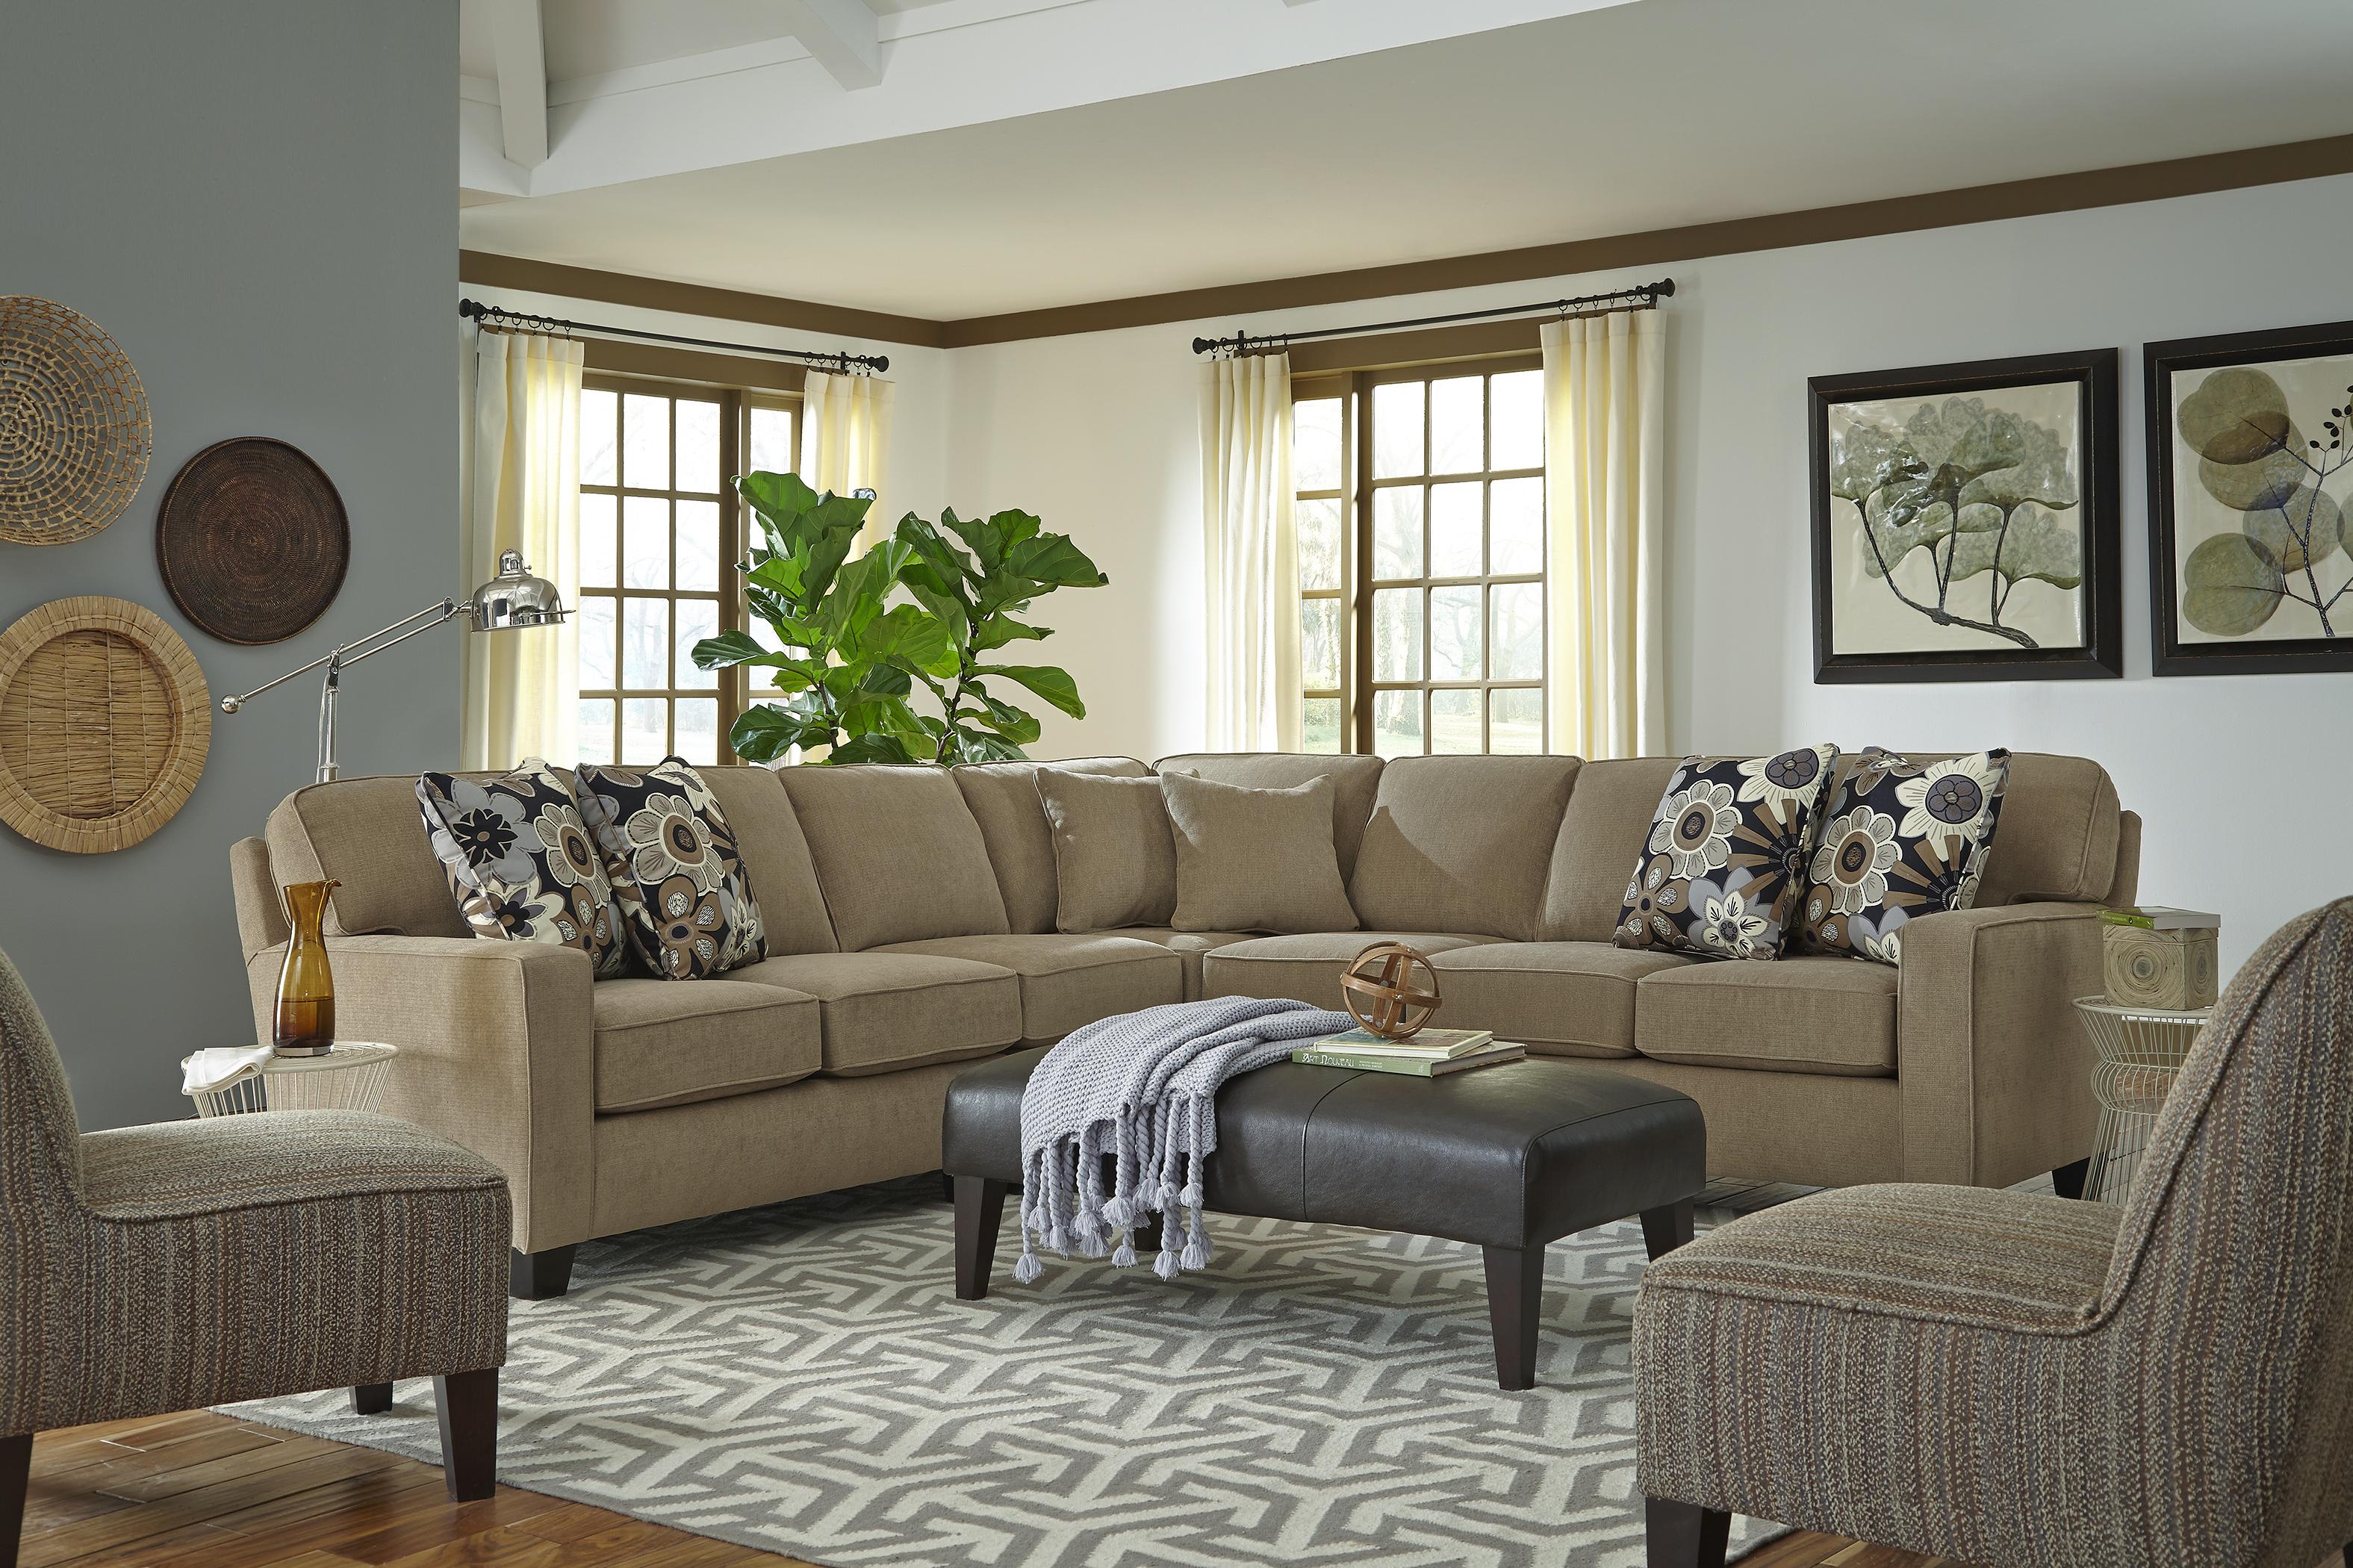 Customizable Sofa Options